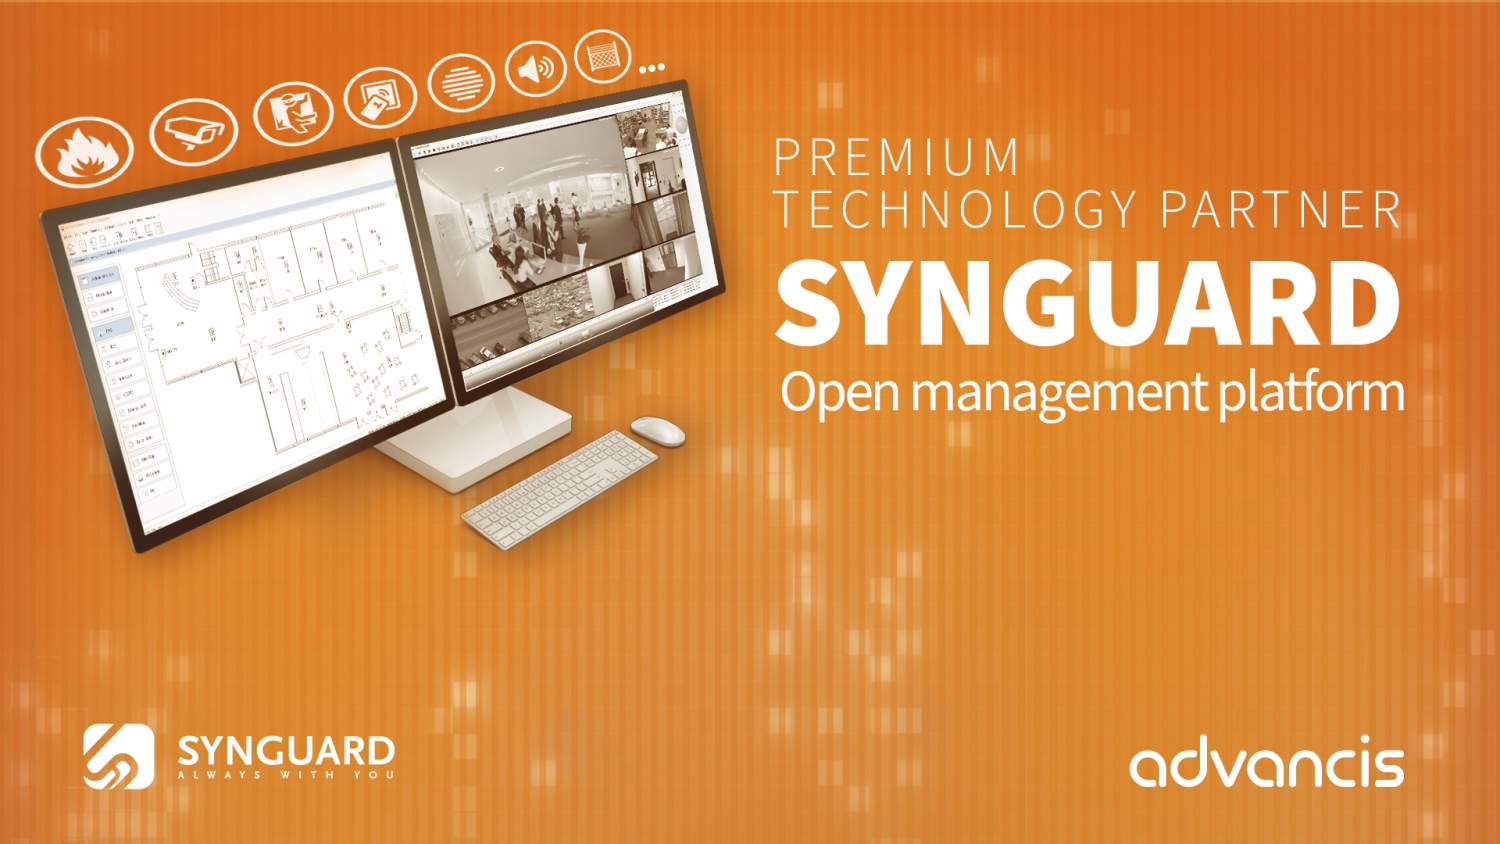  New Premium Technology Partner Synguard